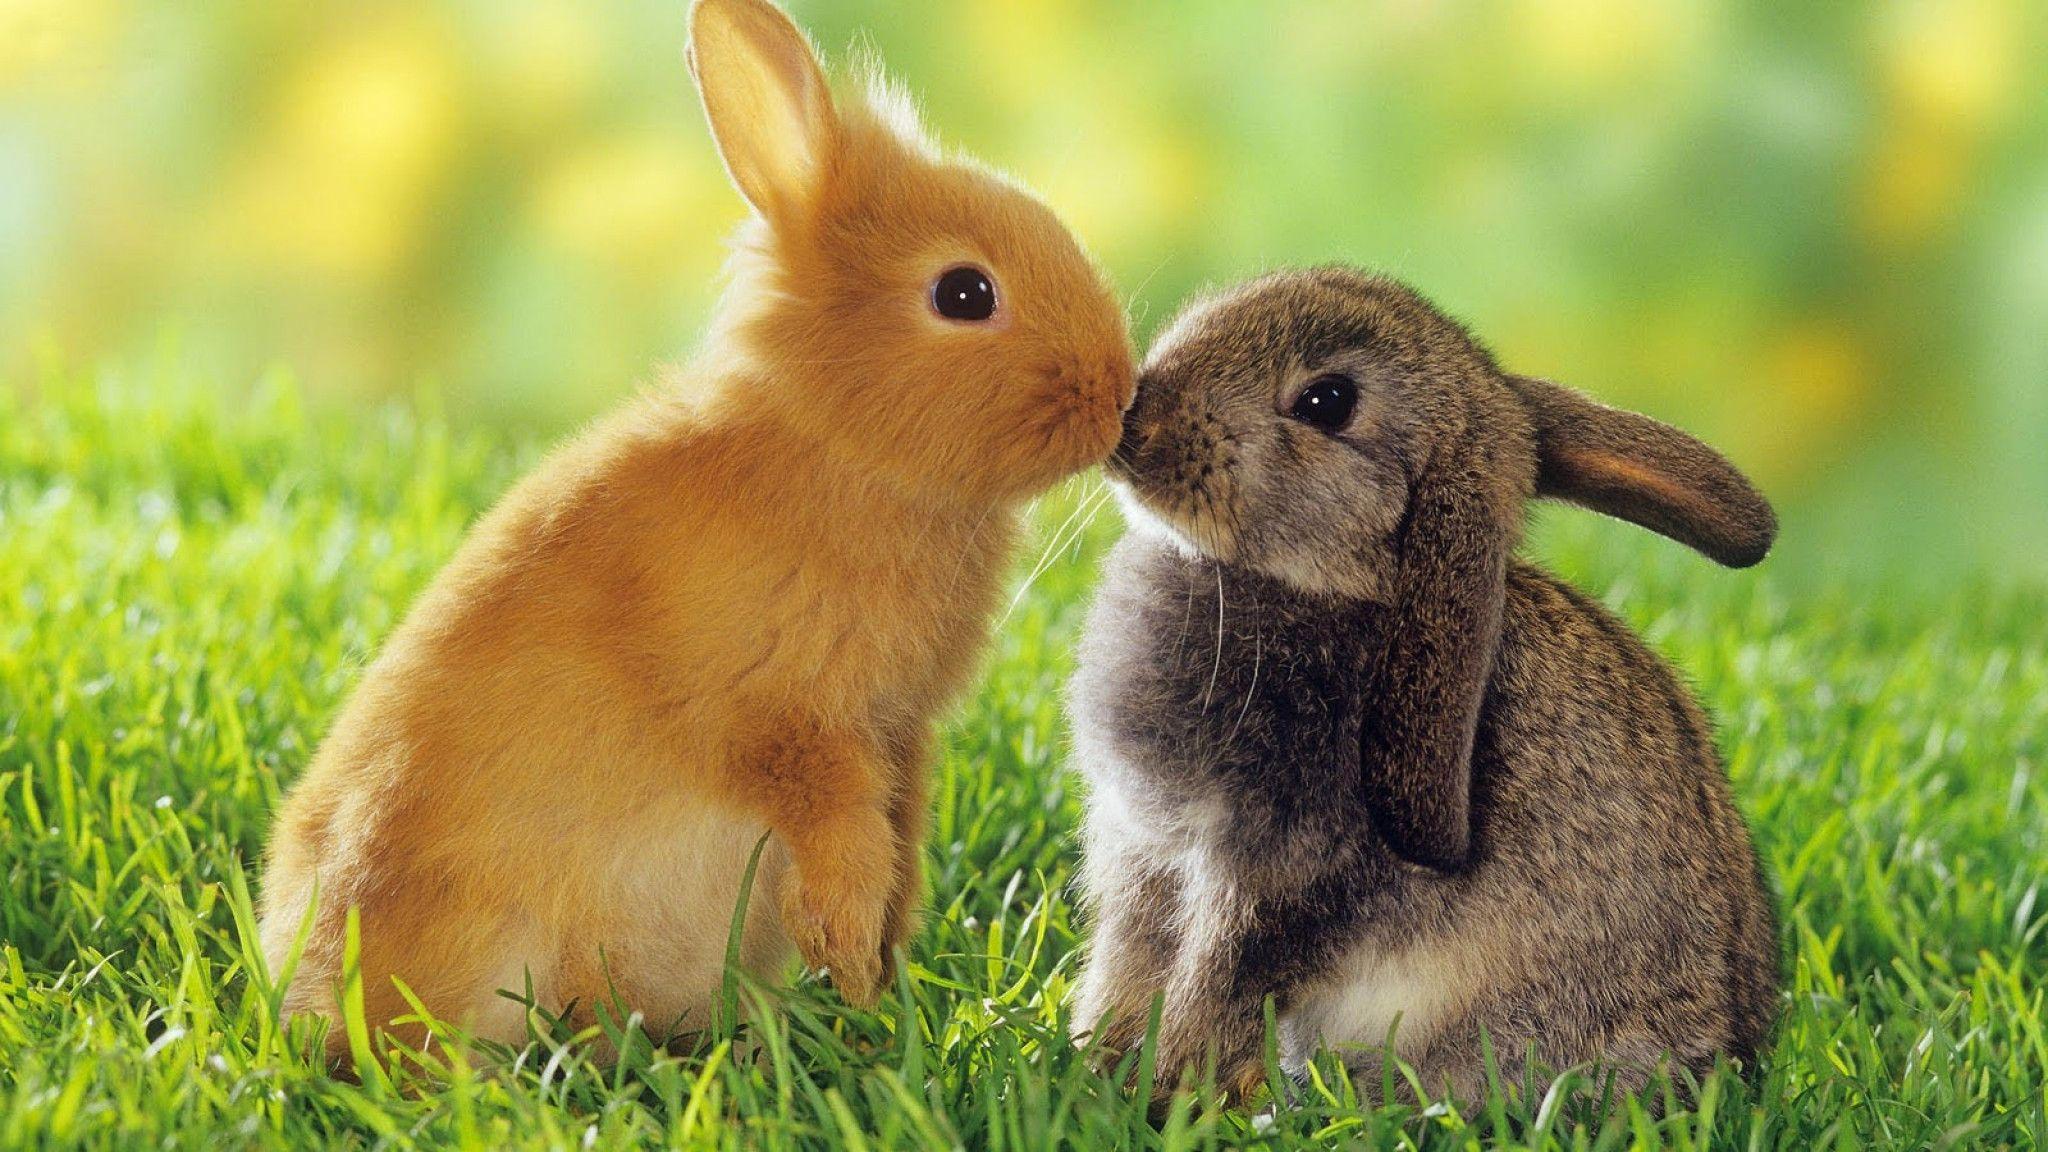 Rabbit HD Wallpaper. Cute Rabbit Desktop Image